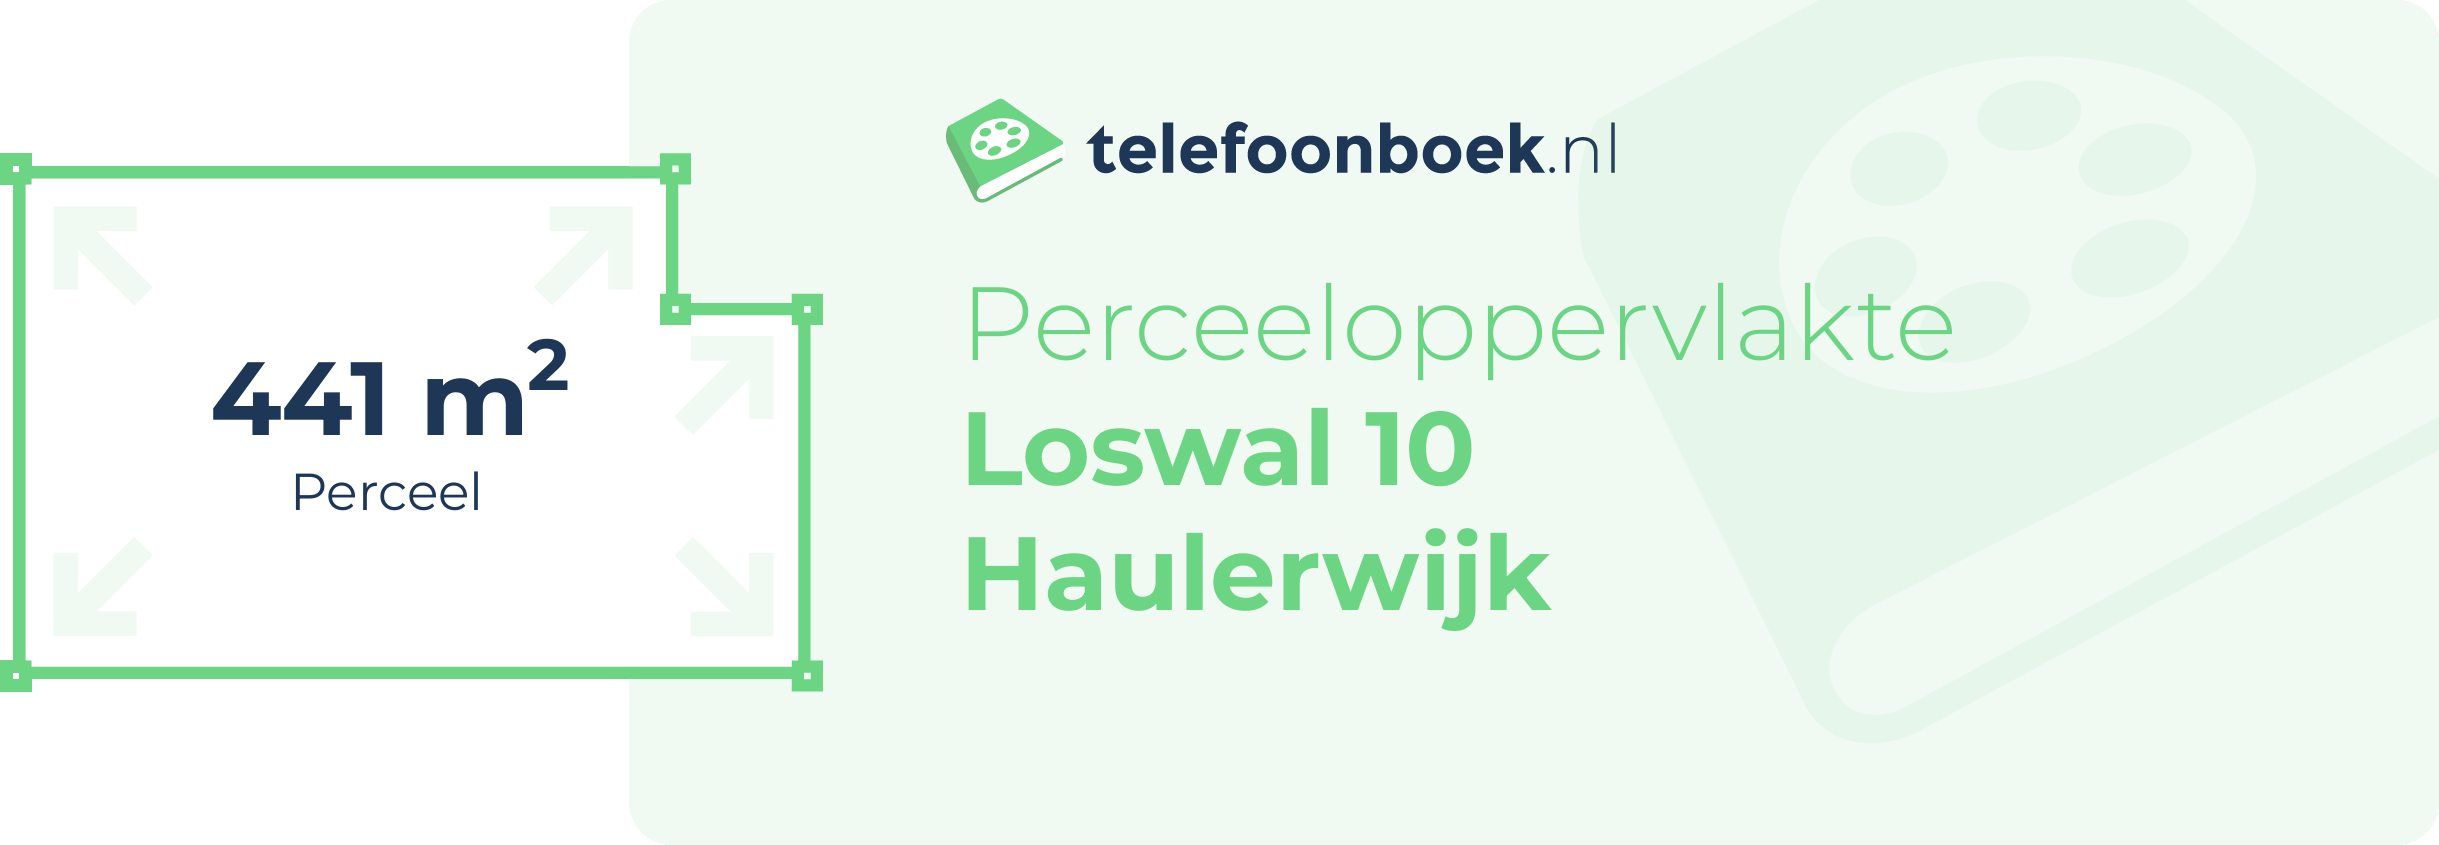 Perceeloppervlakte Loswal 10 Haulerwijk